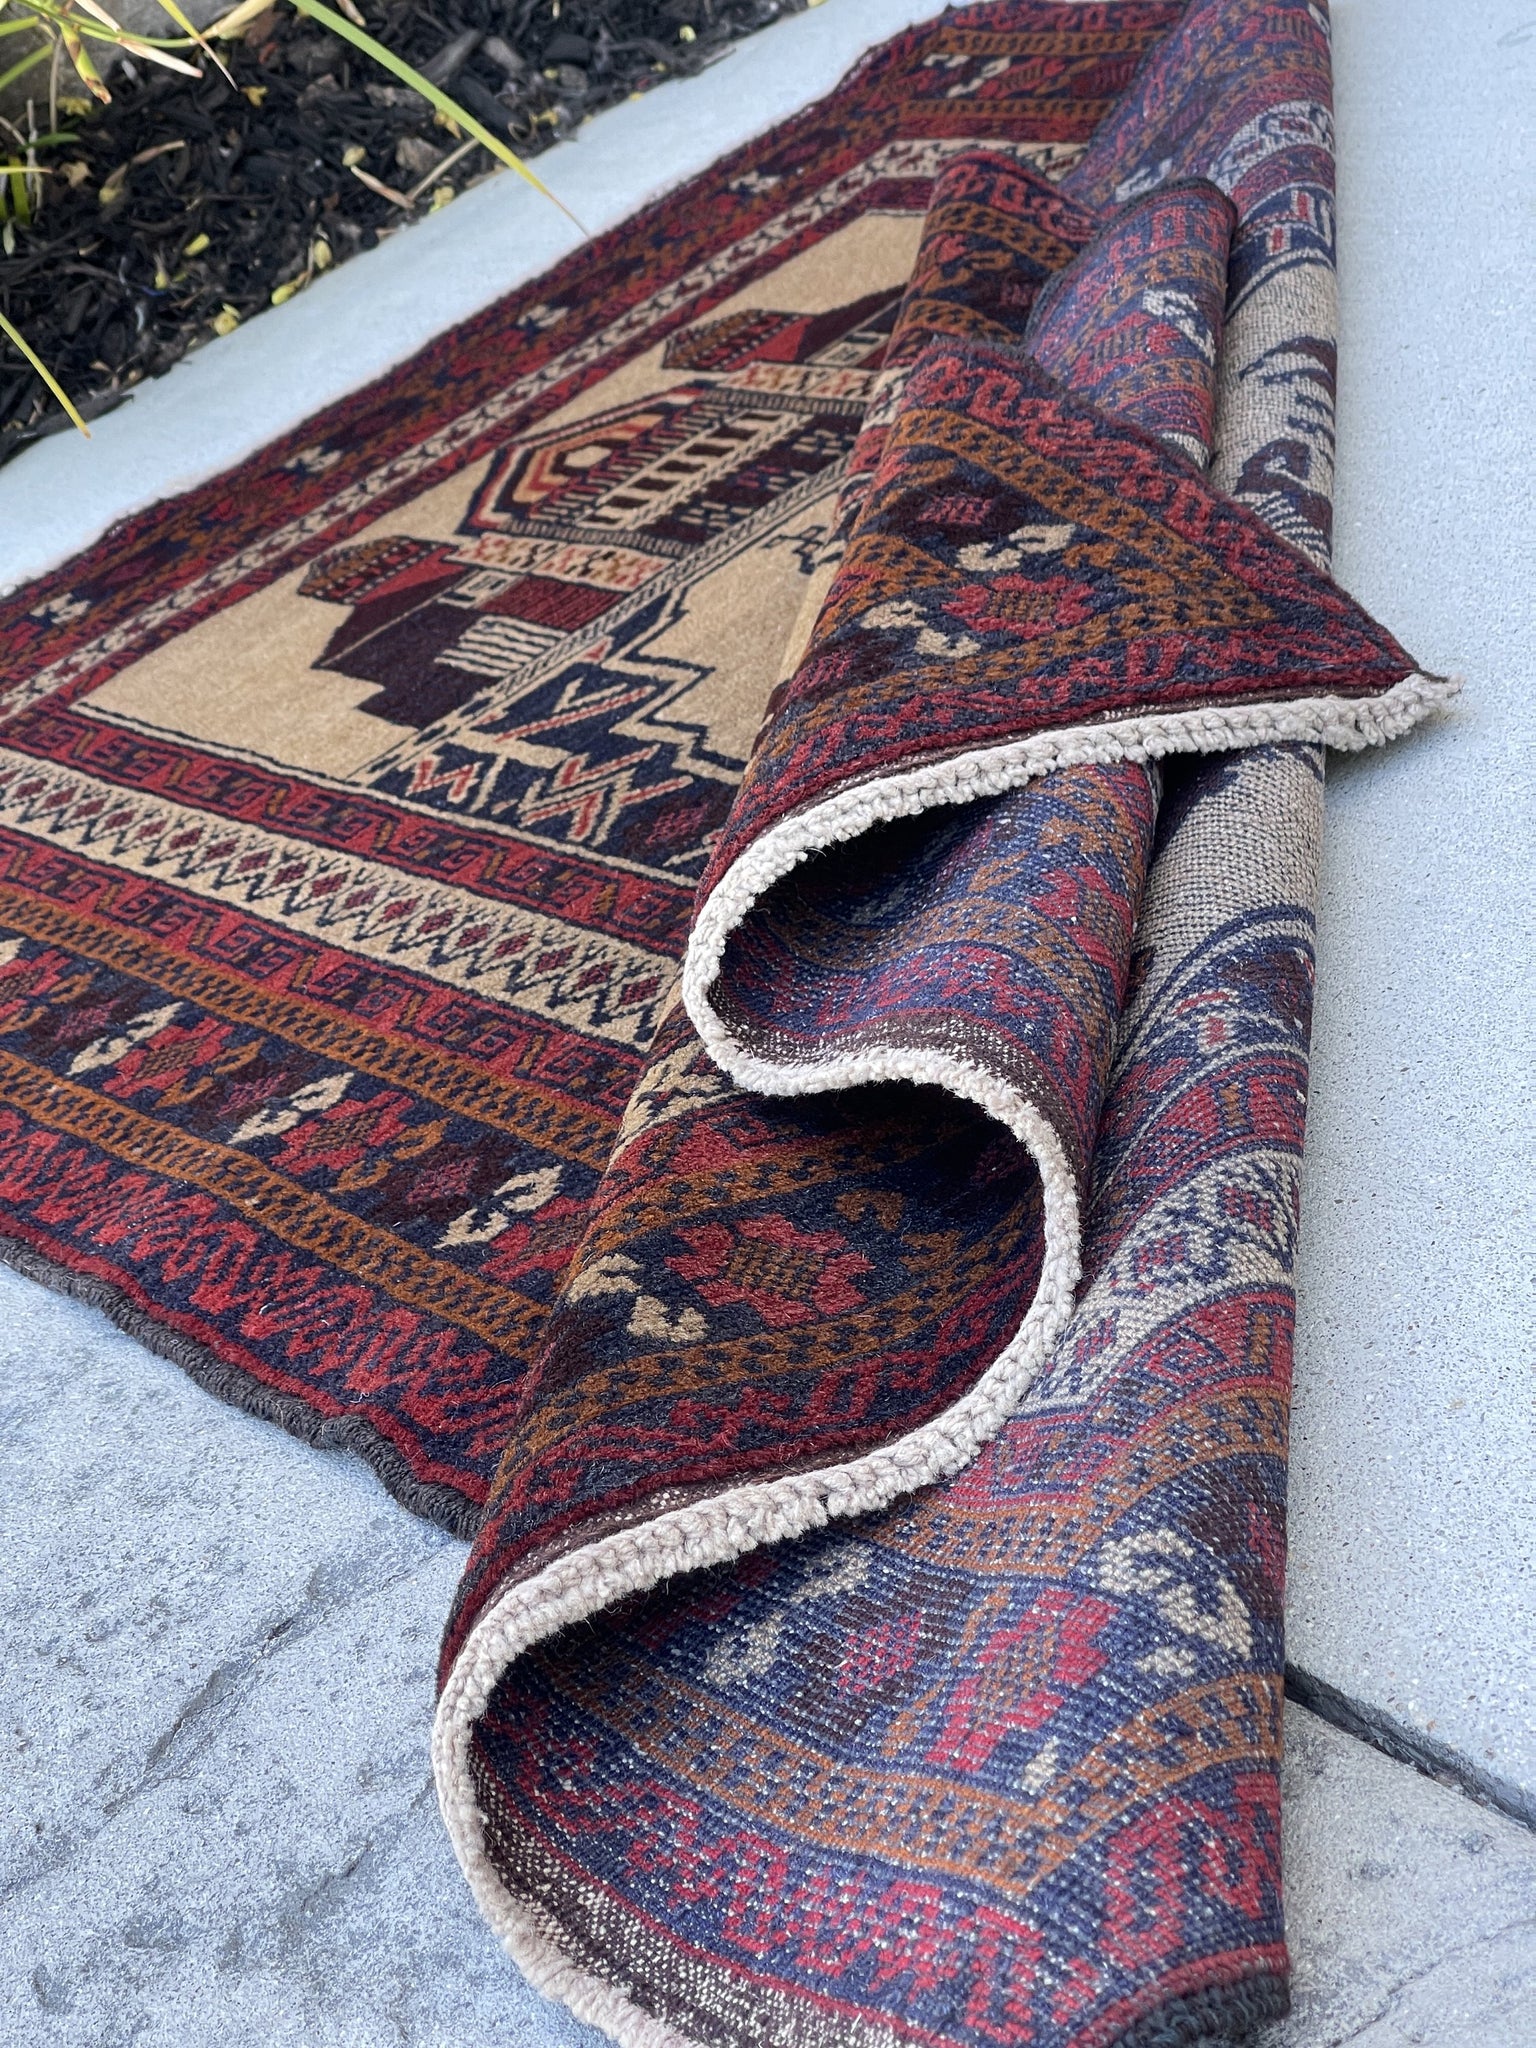 3x5 (90x150) Handmade Vintage Afghan Rug | Red Mocha Peanut Brown Beige Tan | Nomadic Baluch Boho Bohemian Tribal Turkish Moroccan Wool